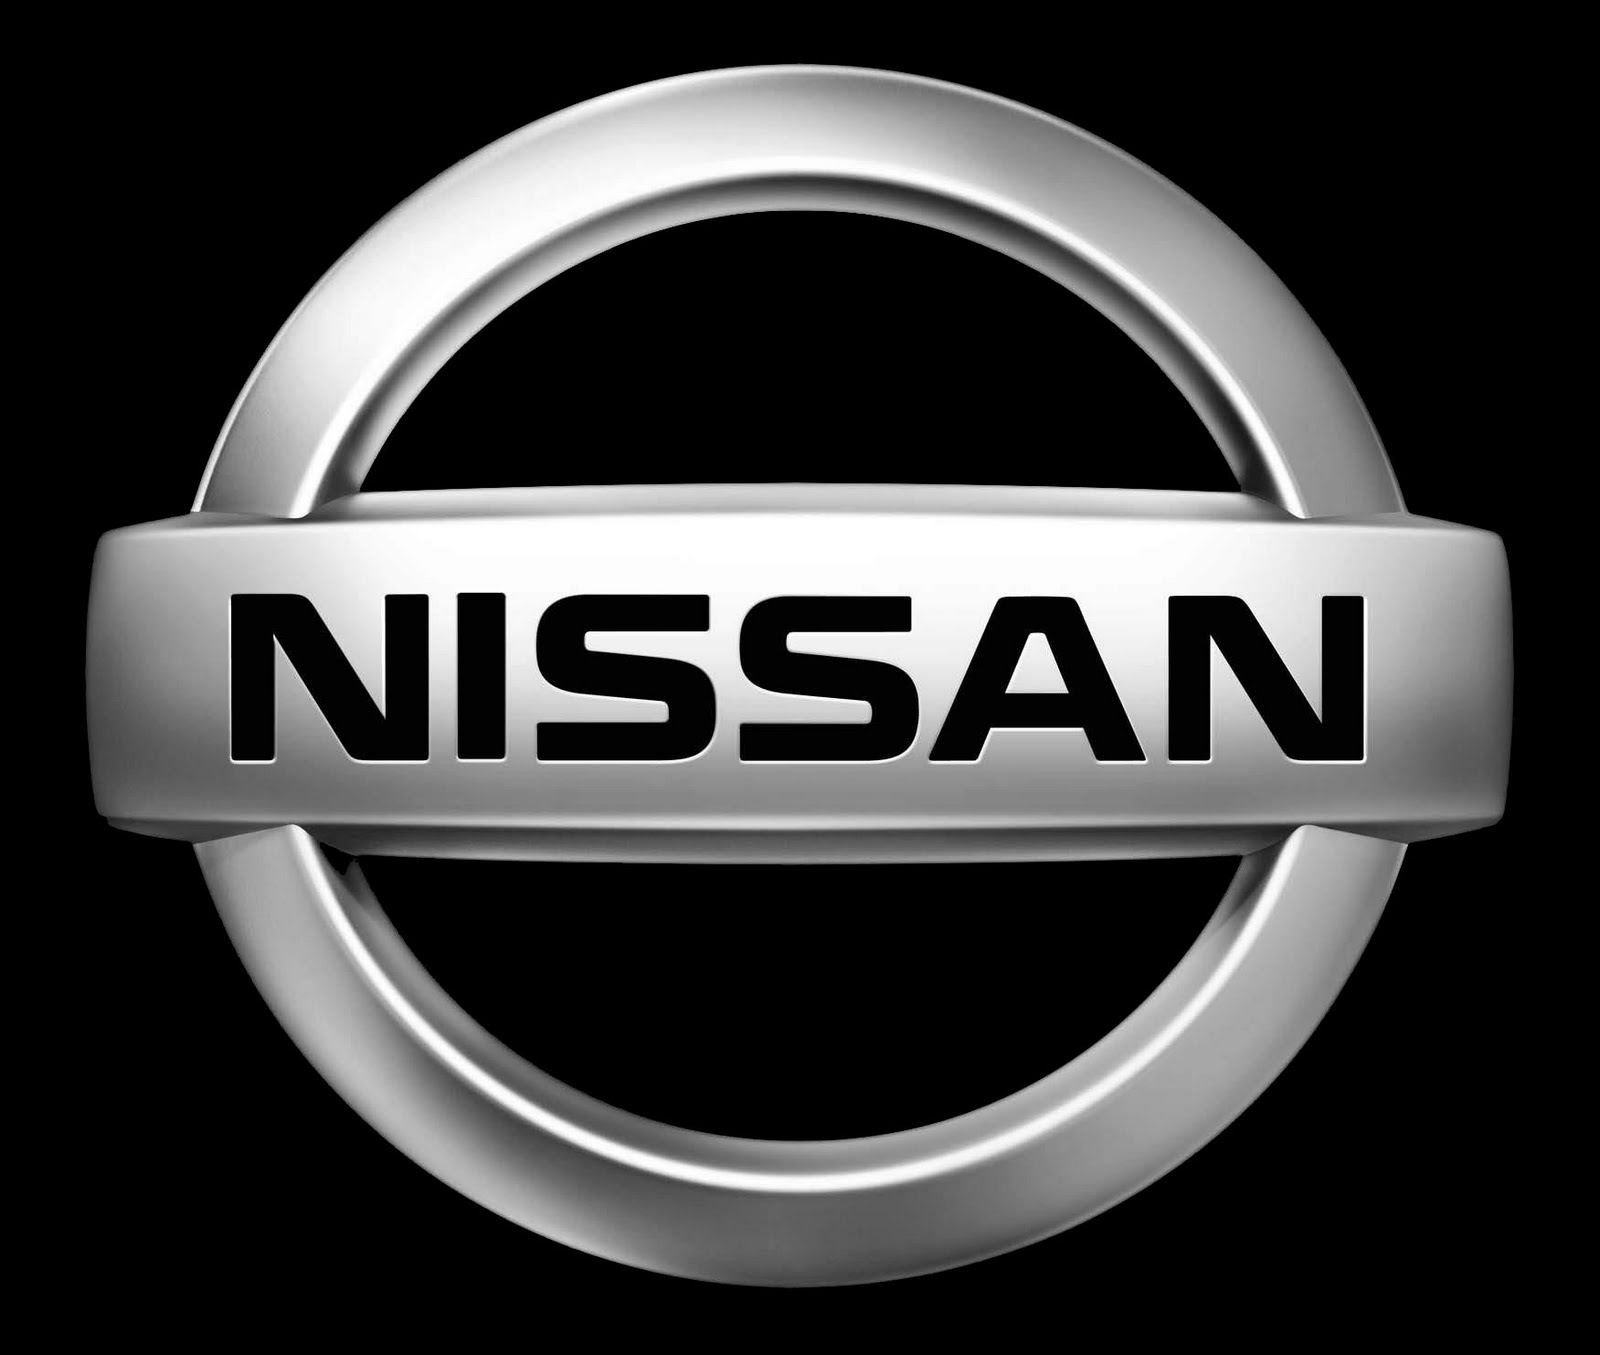 Nissan logo history